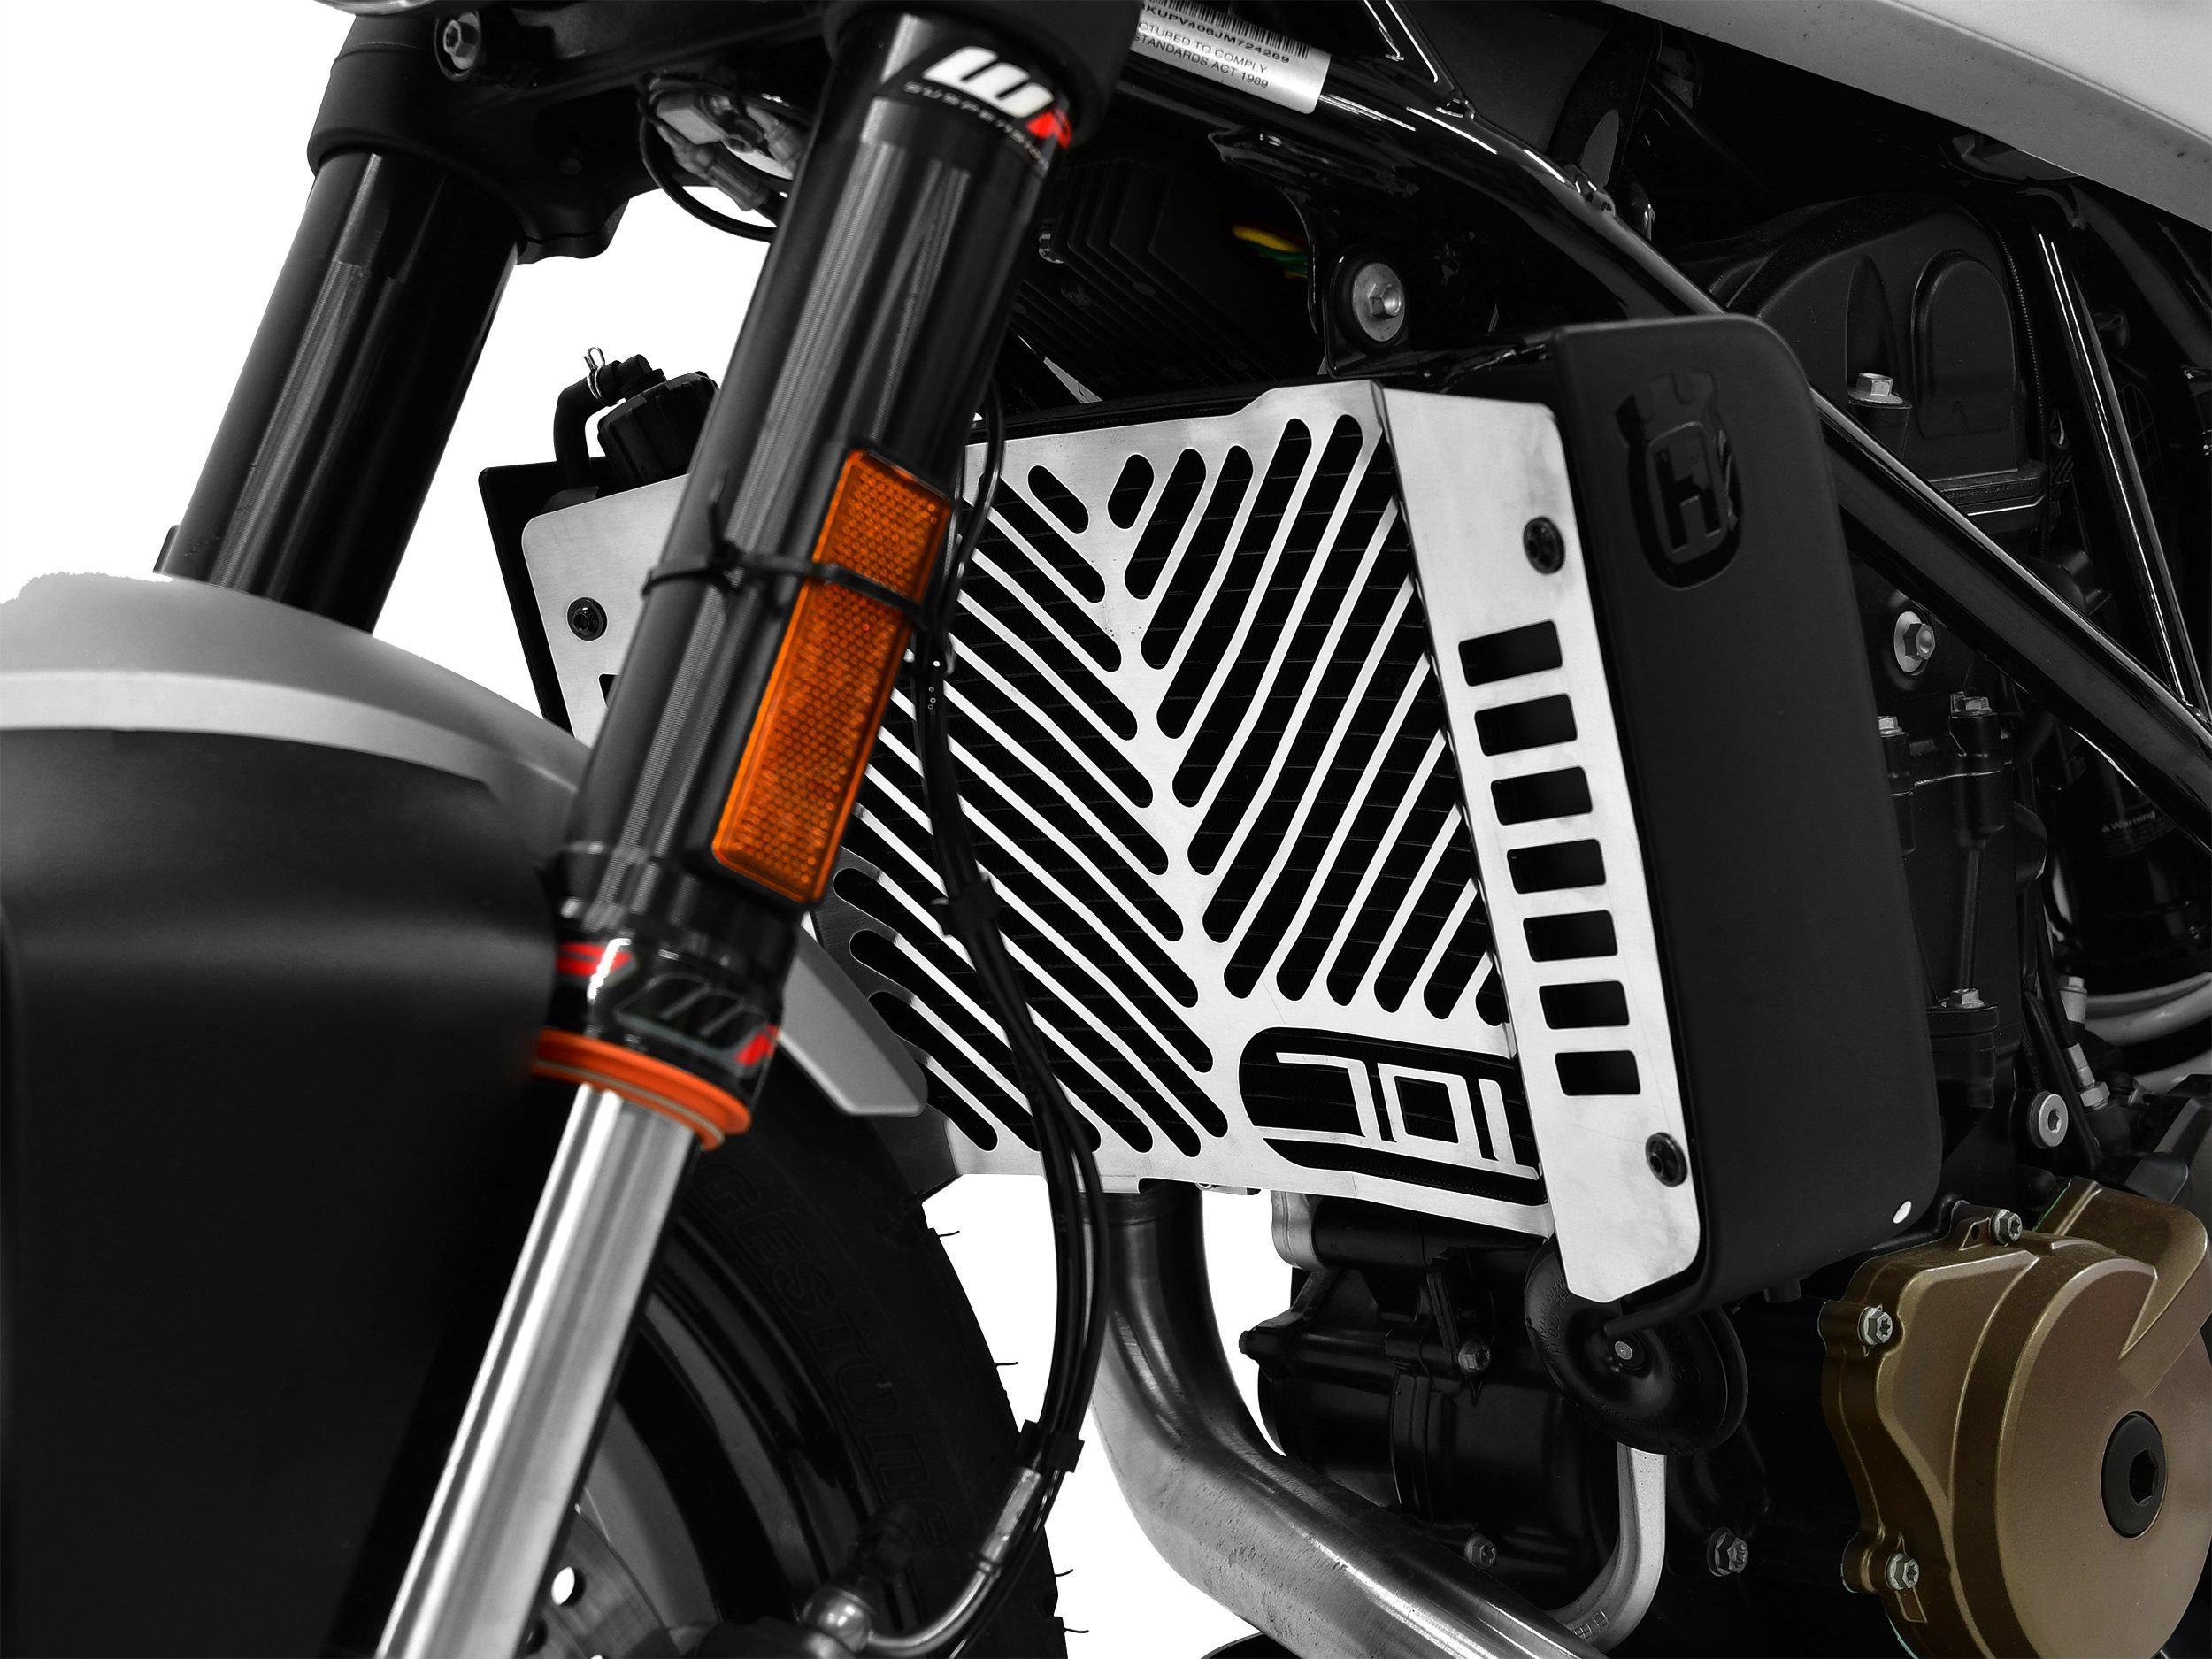 ZIEGER Motorrad-Additiv Kühlerabdeckung für silber, Husqvarna 701 Motorradkühlerabdeckung Logo Vitpilen